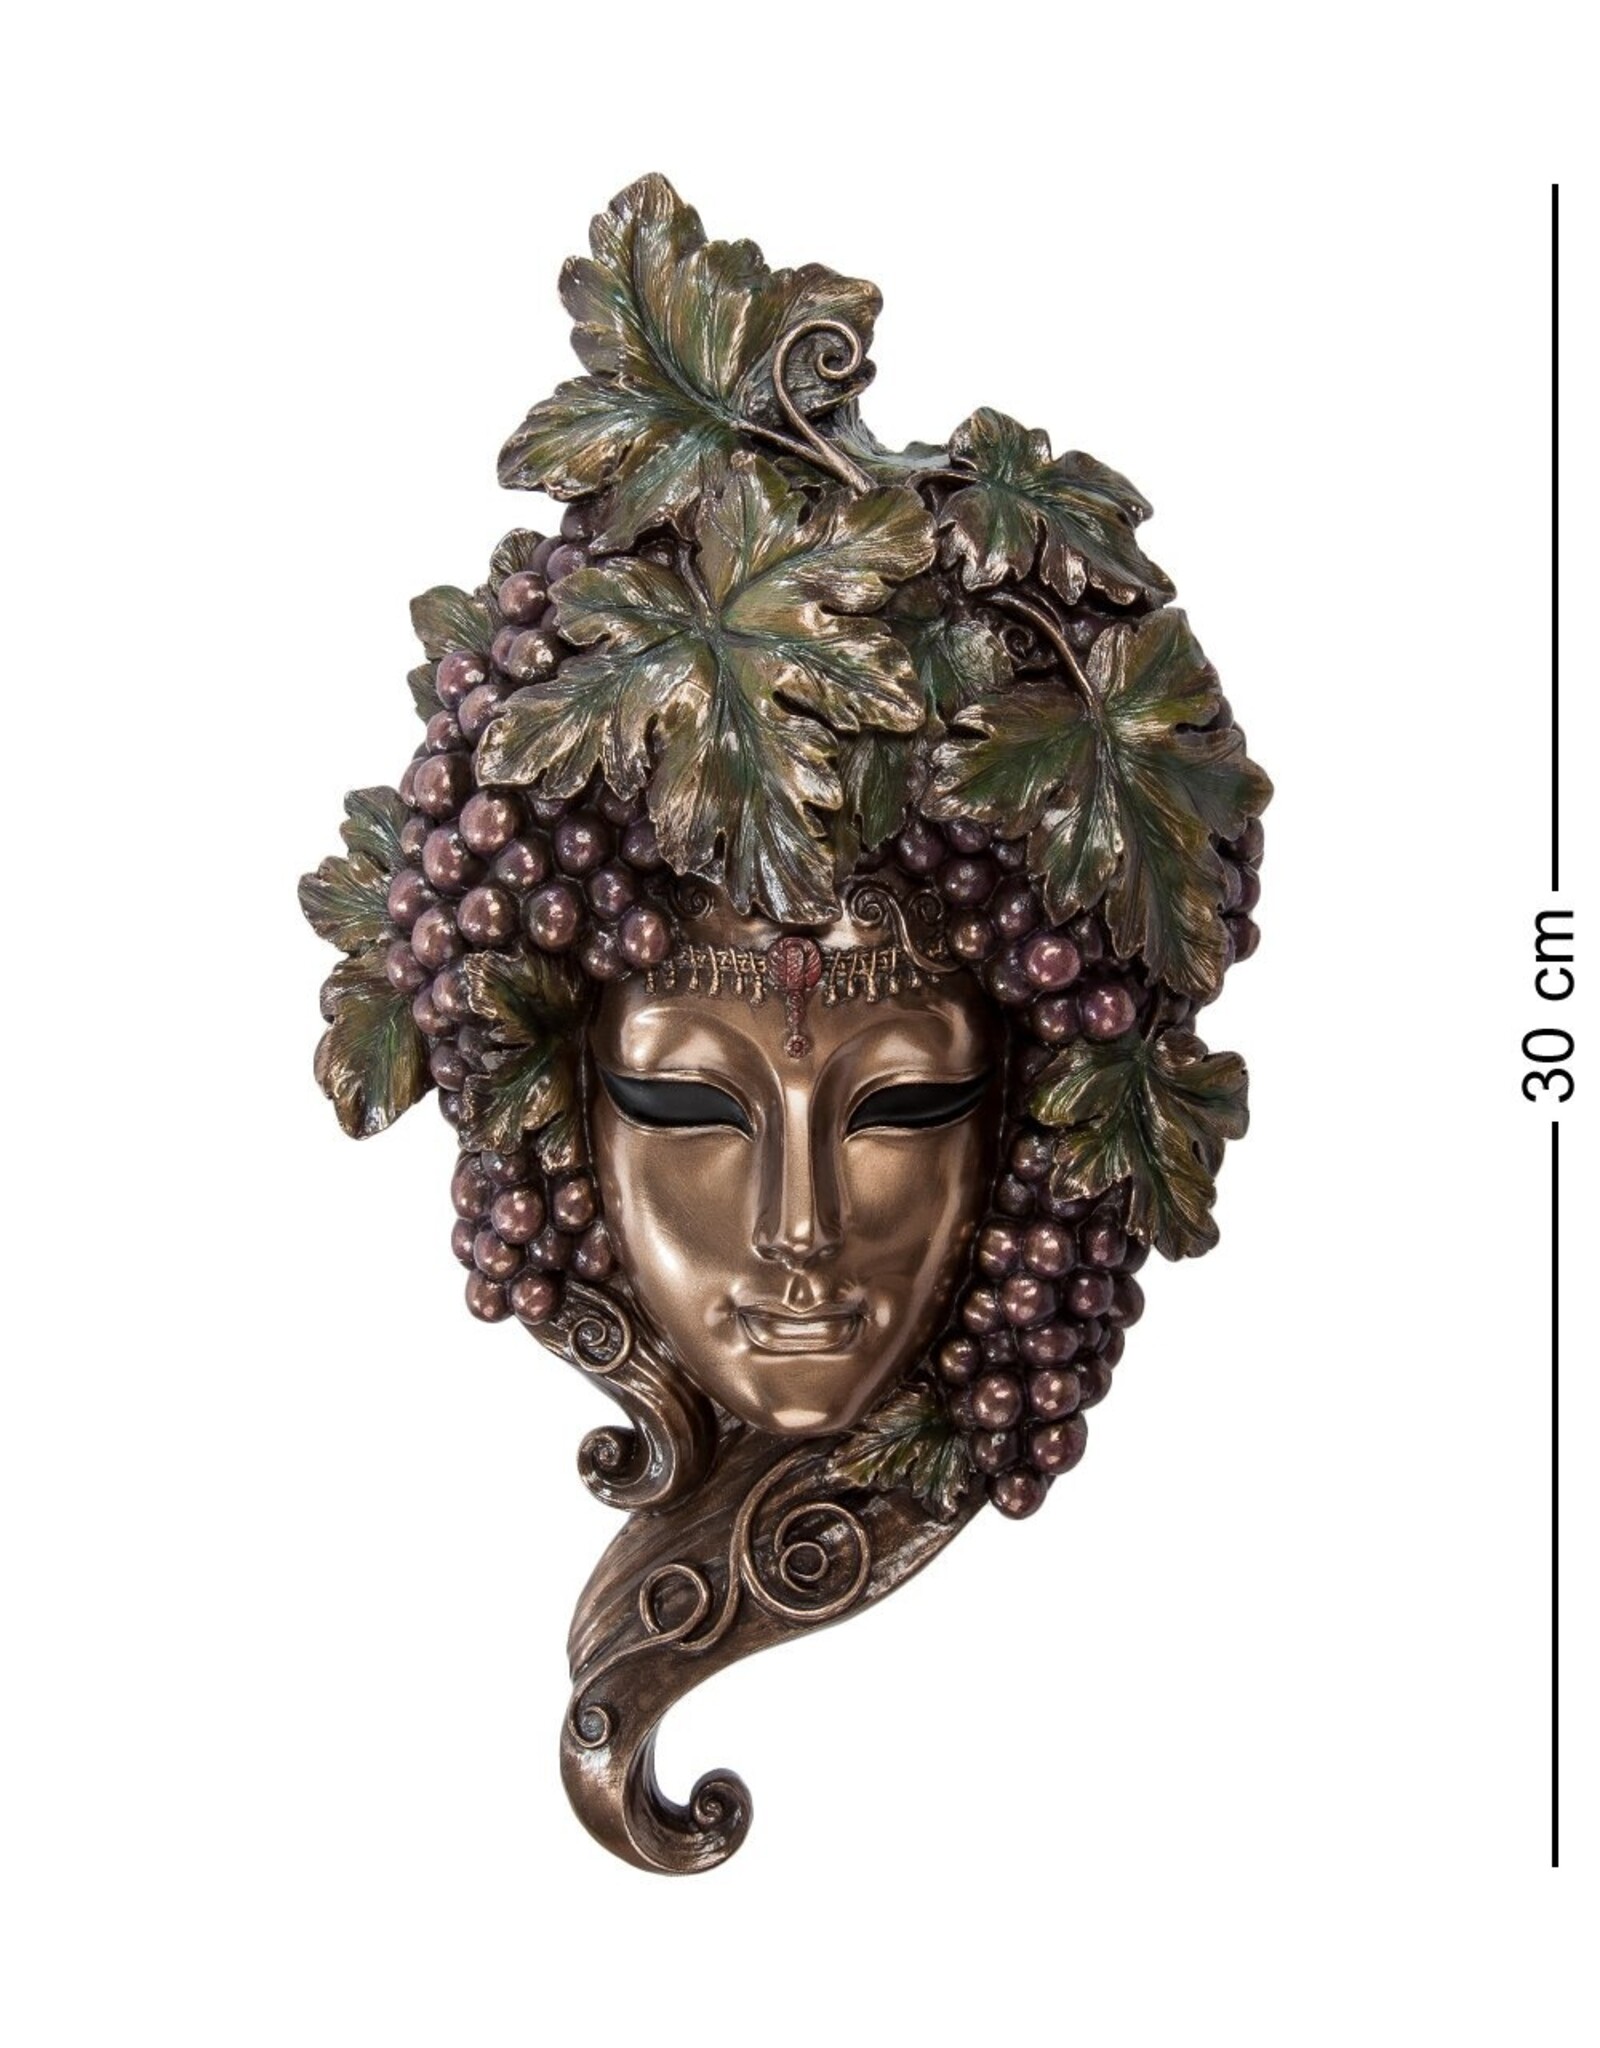 Veronese Design Miscellaneous - Venetian Mask Con l'Uva with Grapes Wall Hanging Veronese Design